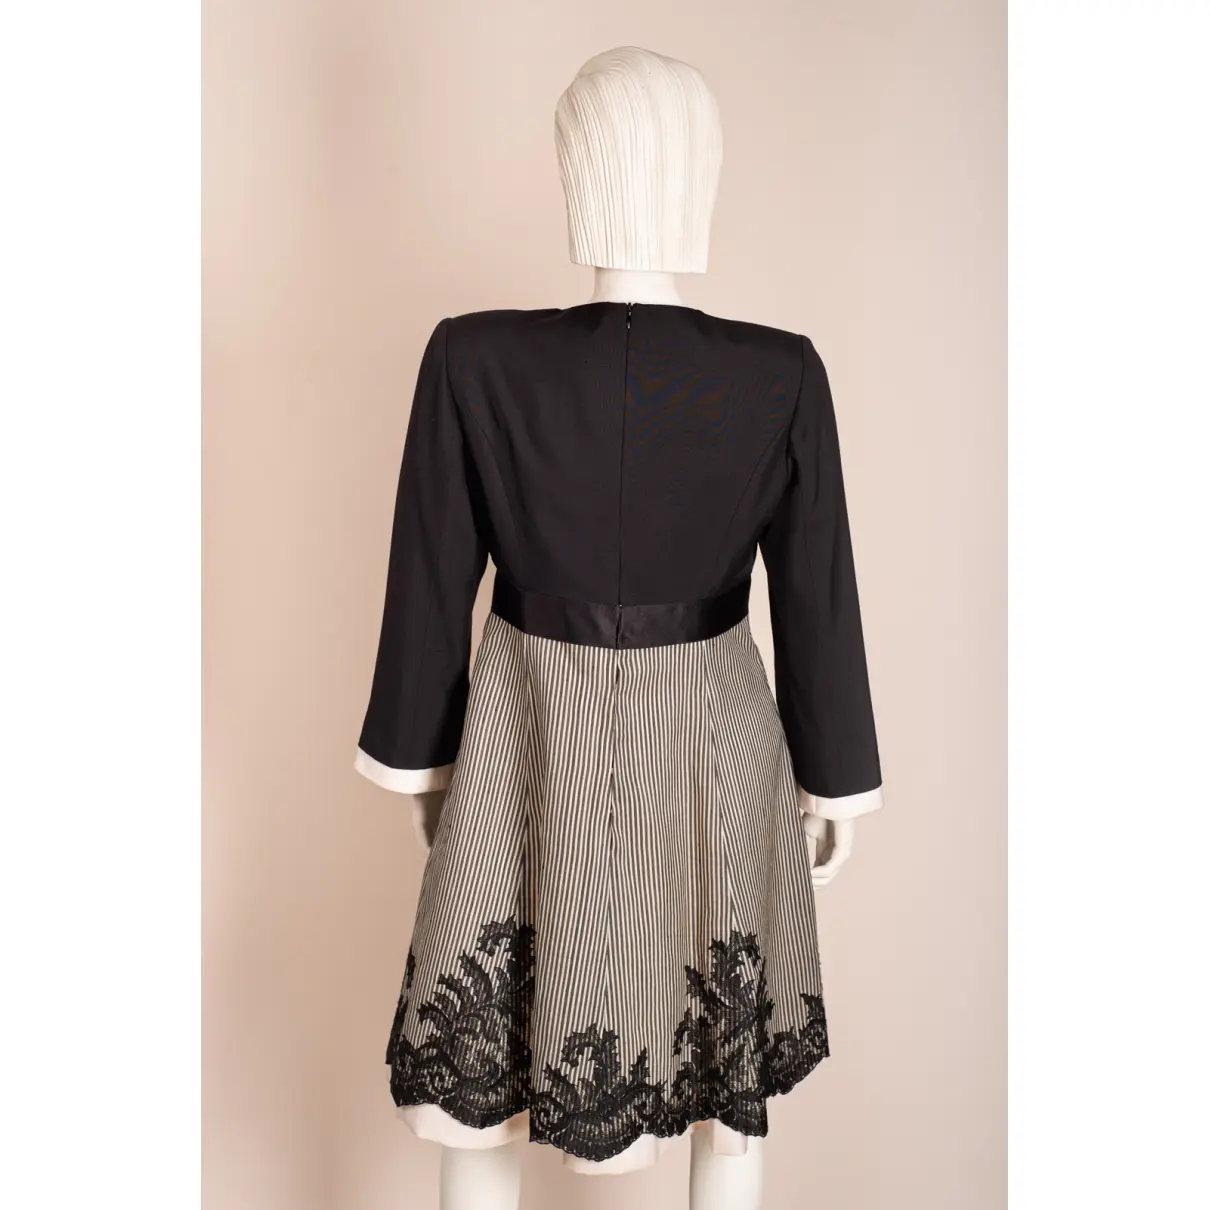 Buy Jacques Fath Silk dress online